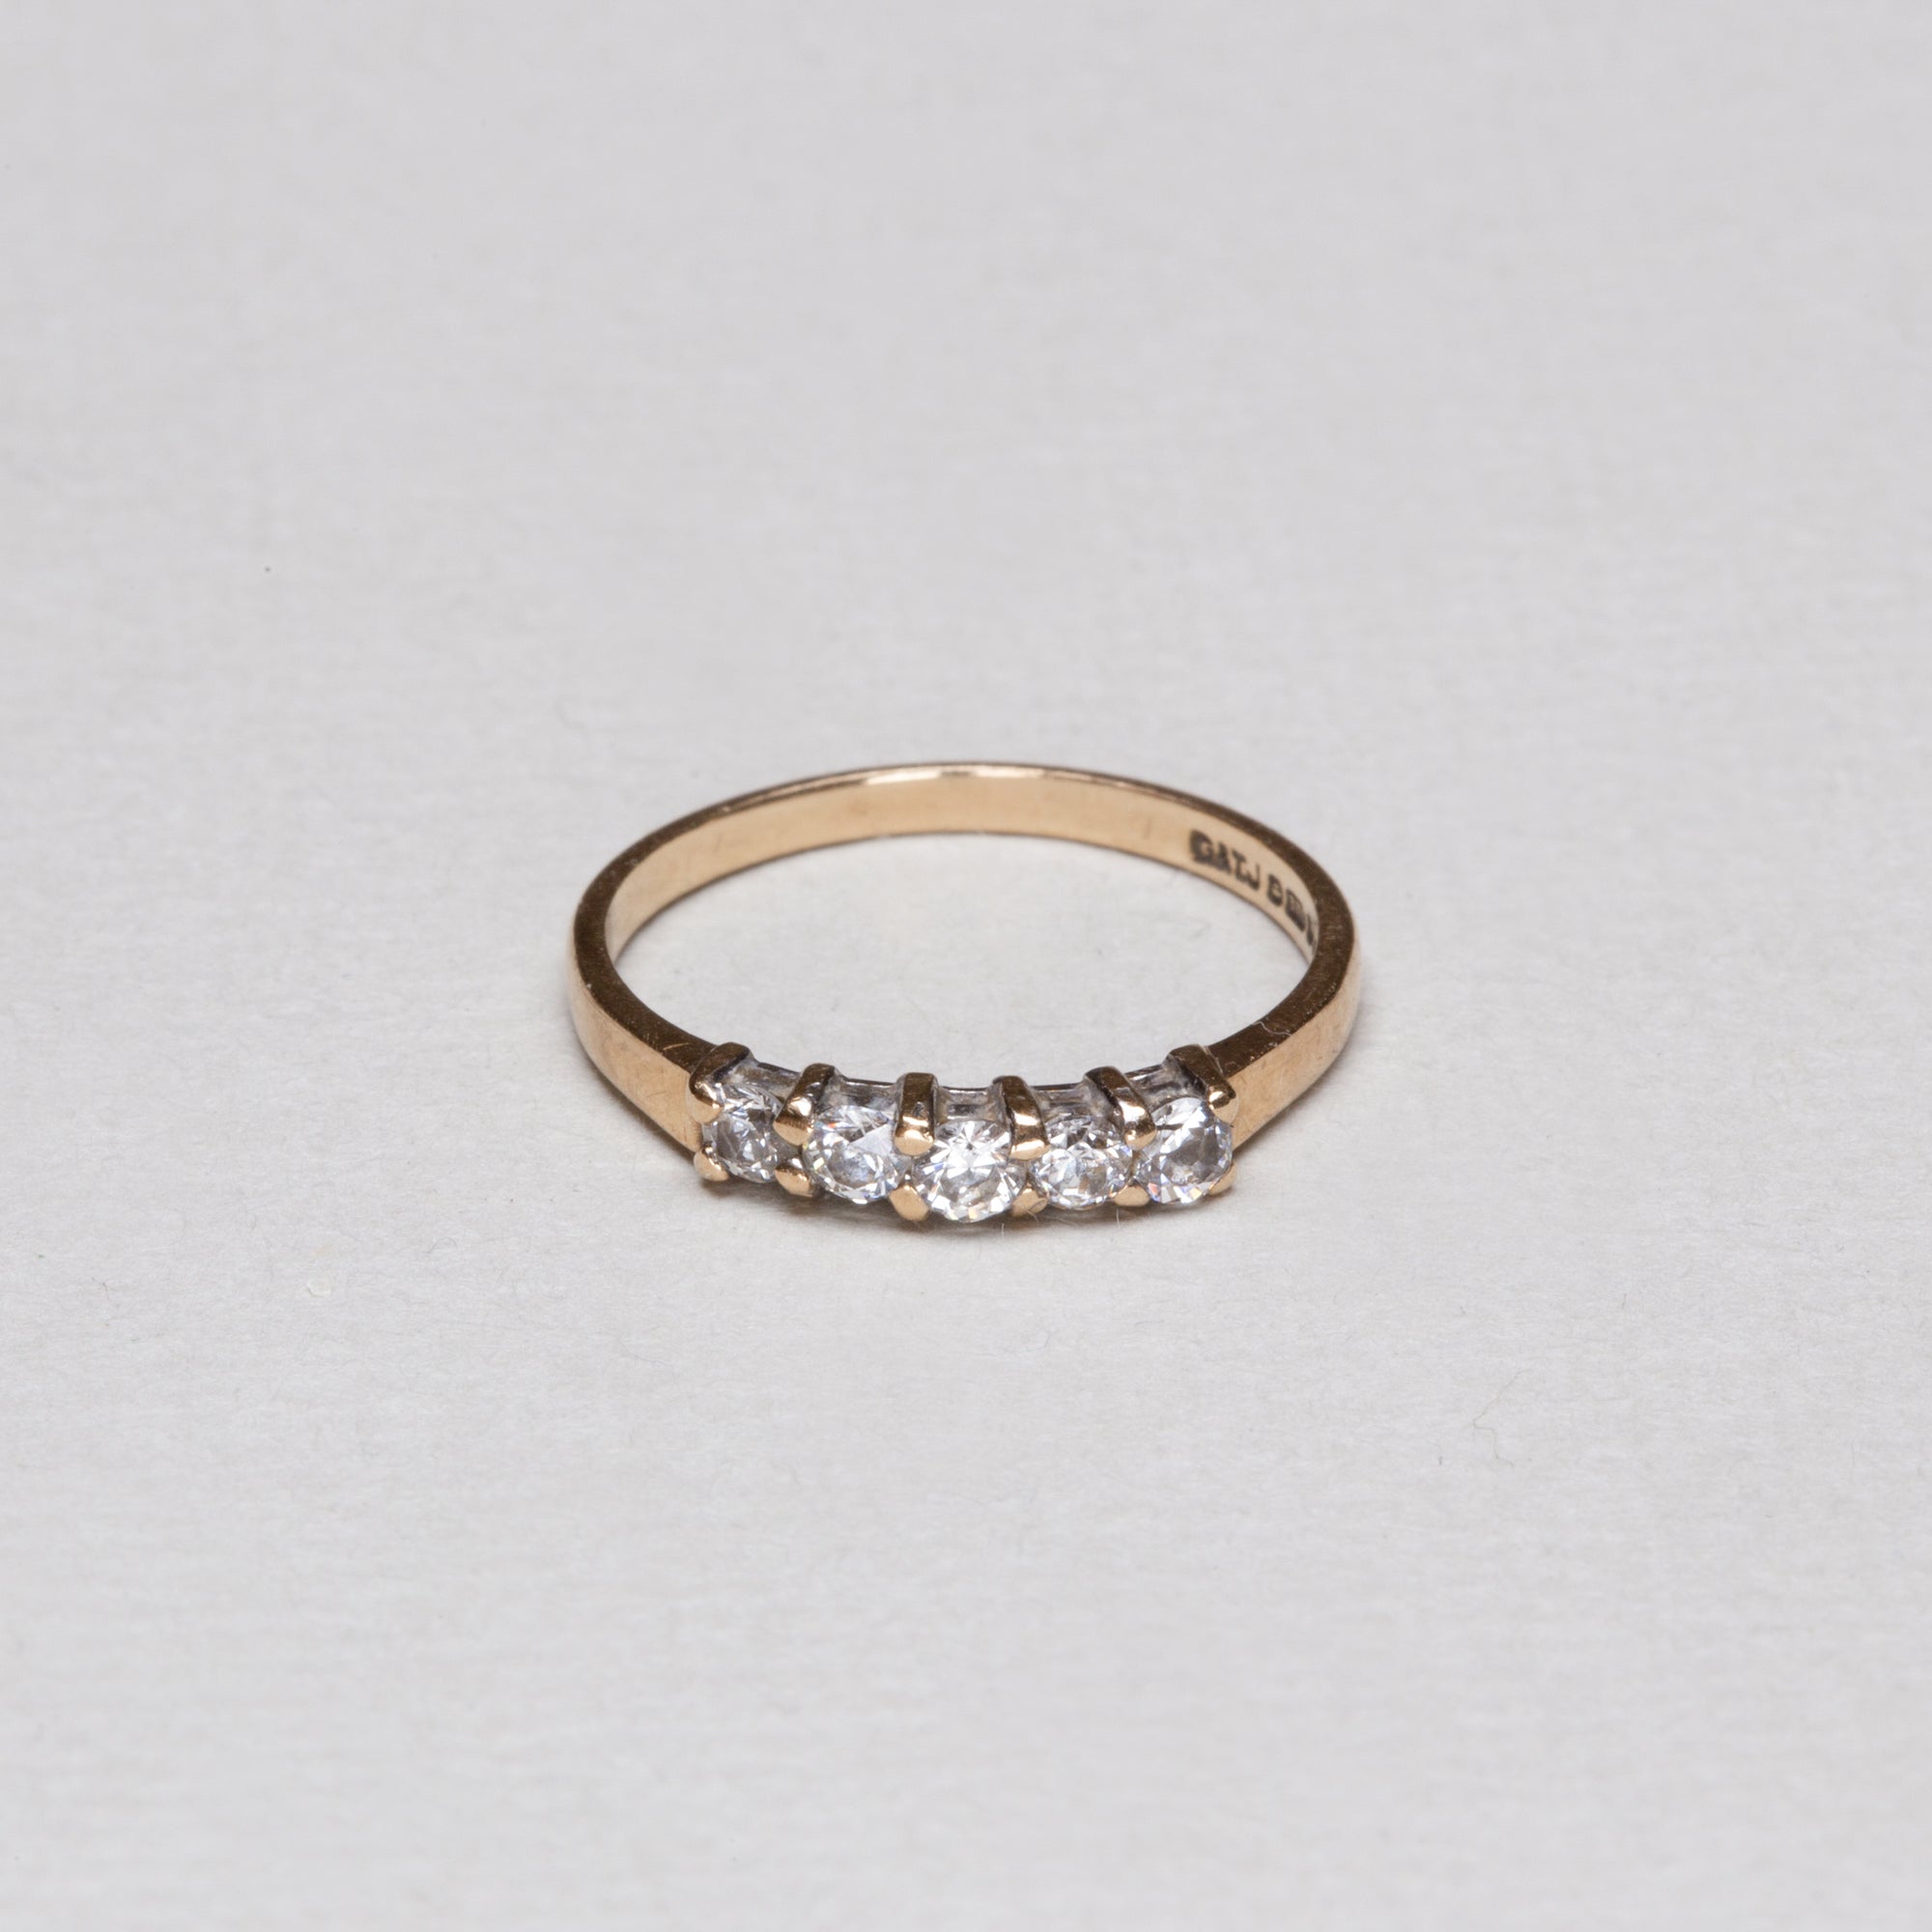 9ct Gold Diamond Engagement Ring